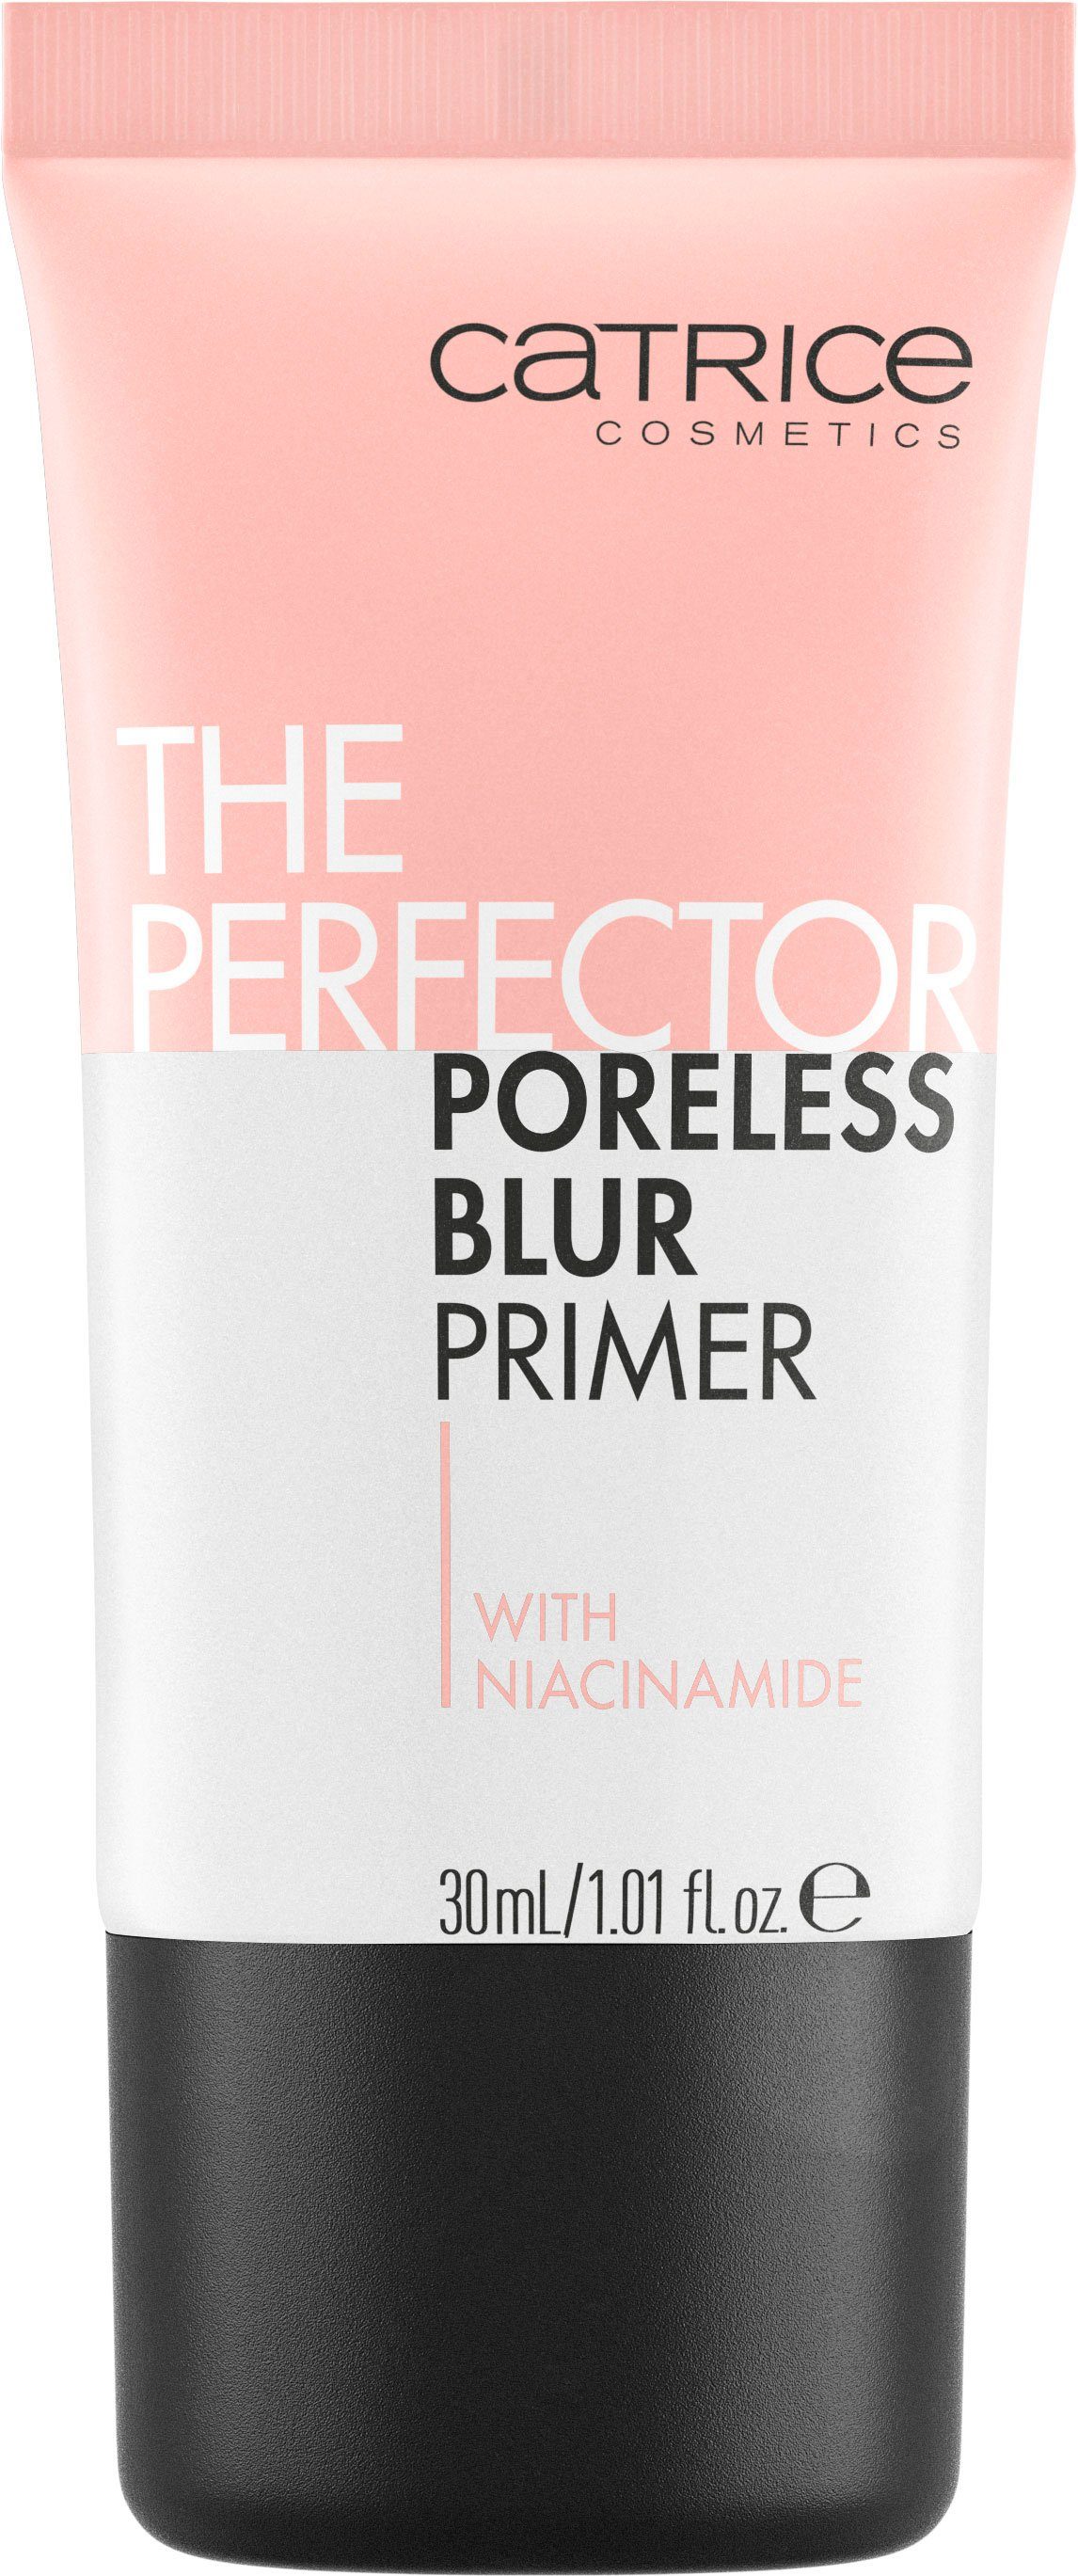 The 3-tlg. Primer Primer, Perfector Blur Poreless Catrice